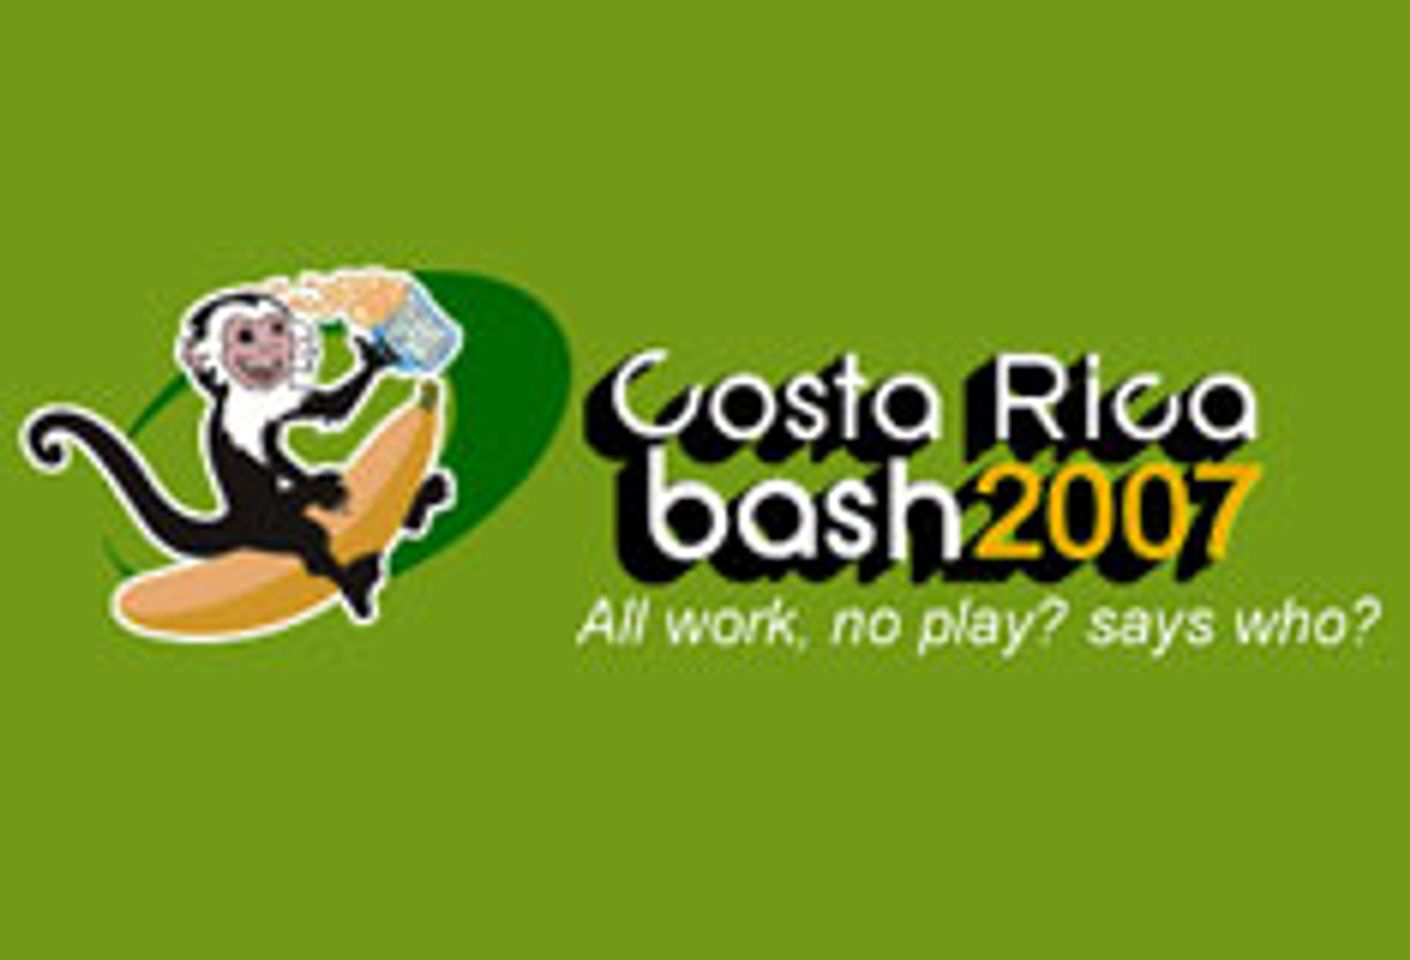 Online Registration for Second Costa Rica Bash